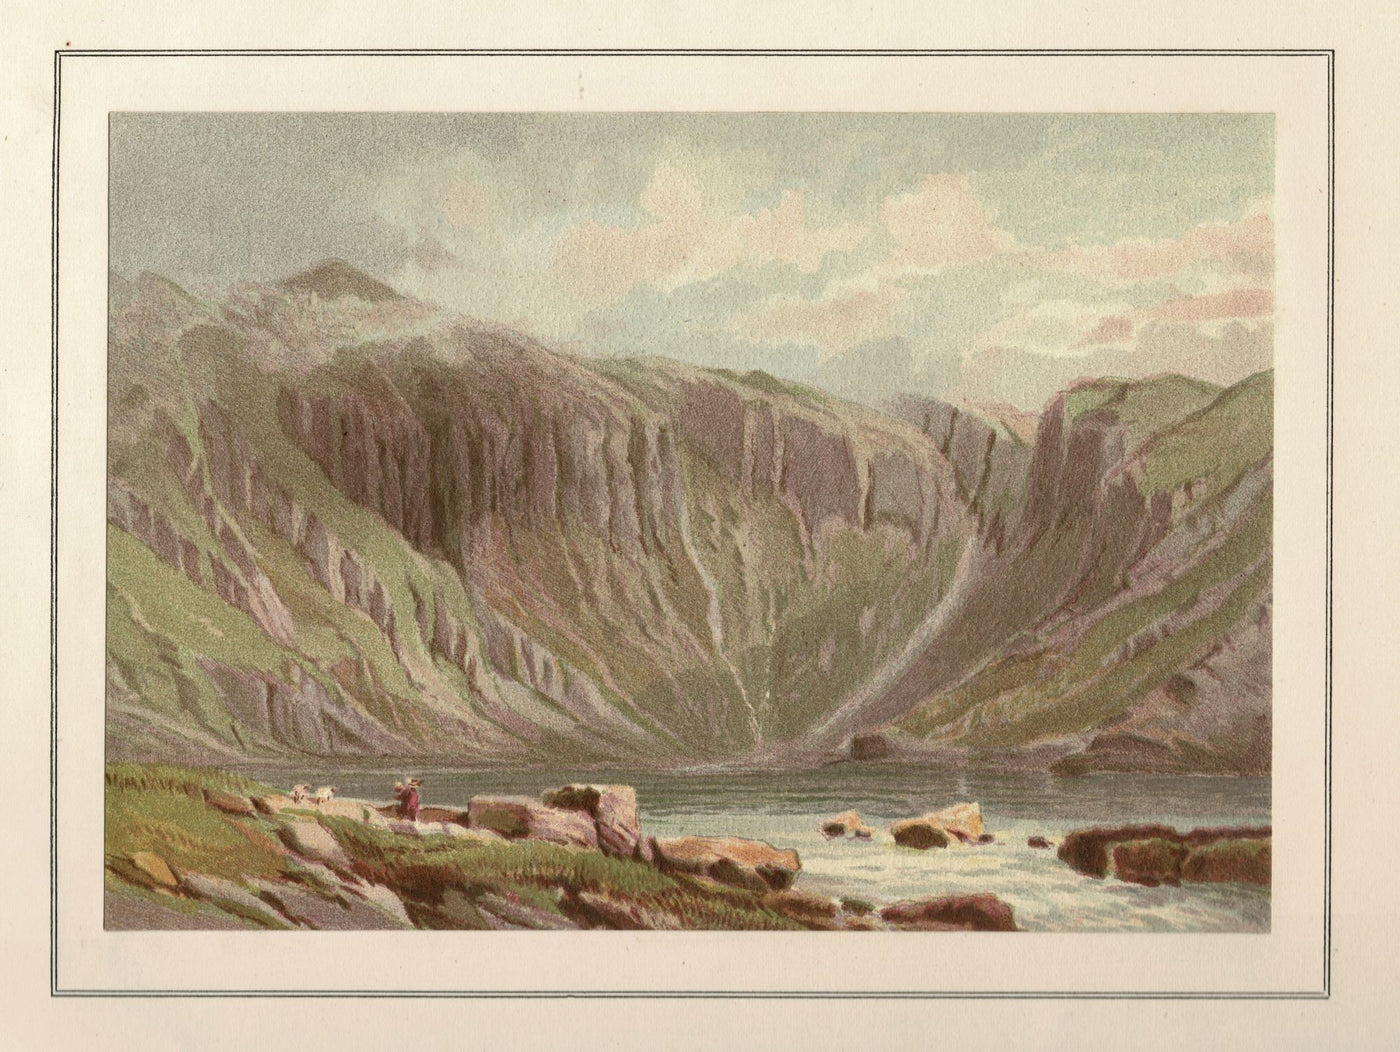 Llyn Idwall Snowdonia Wales antique print 1879